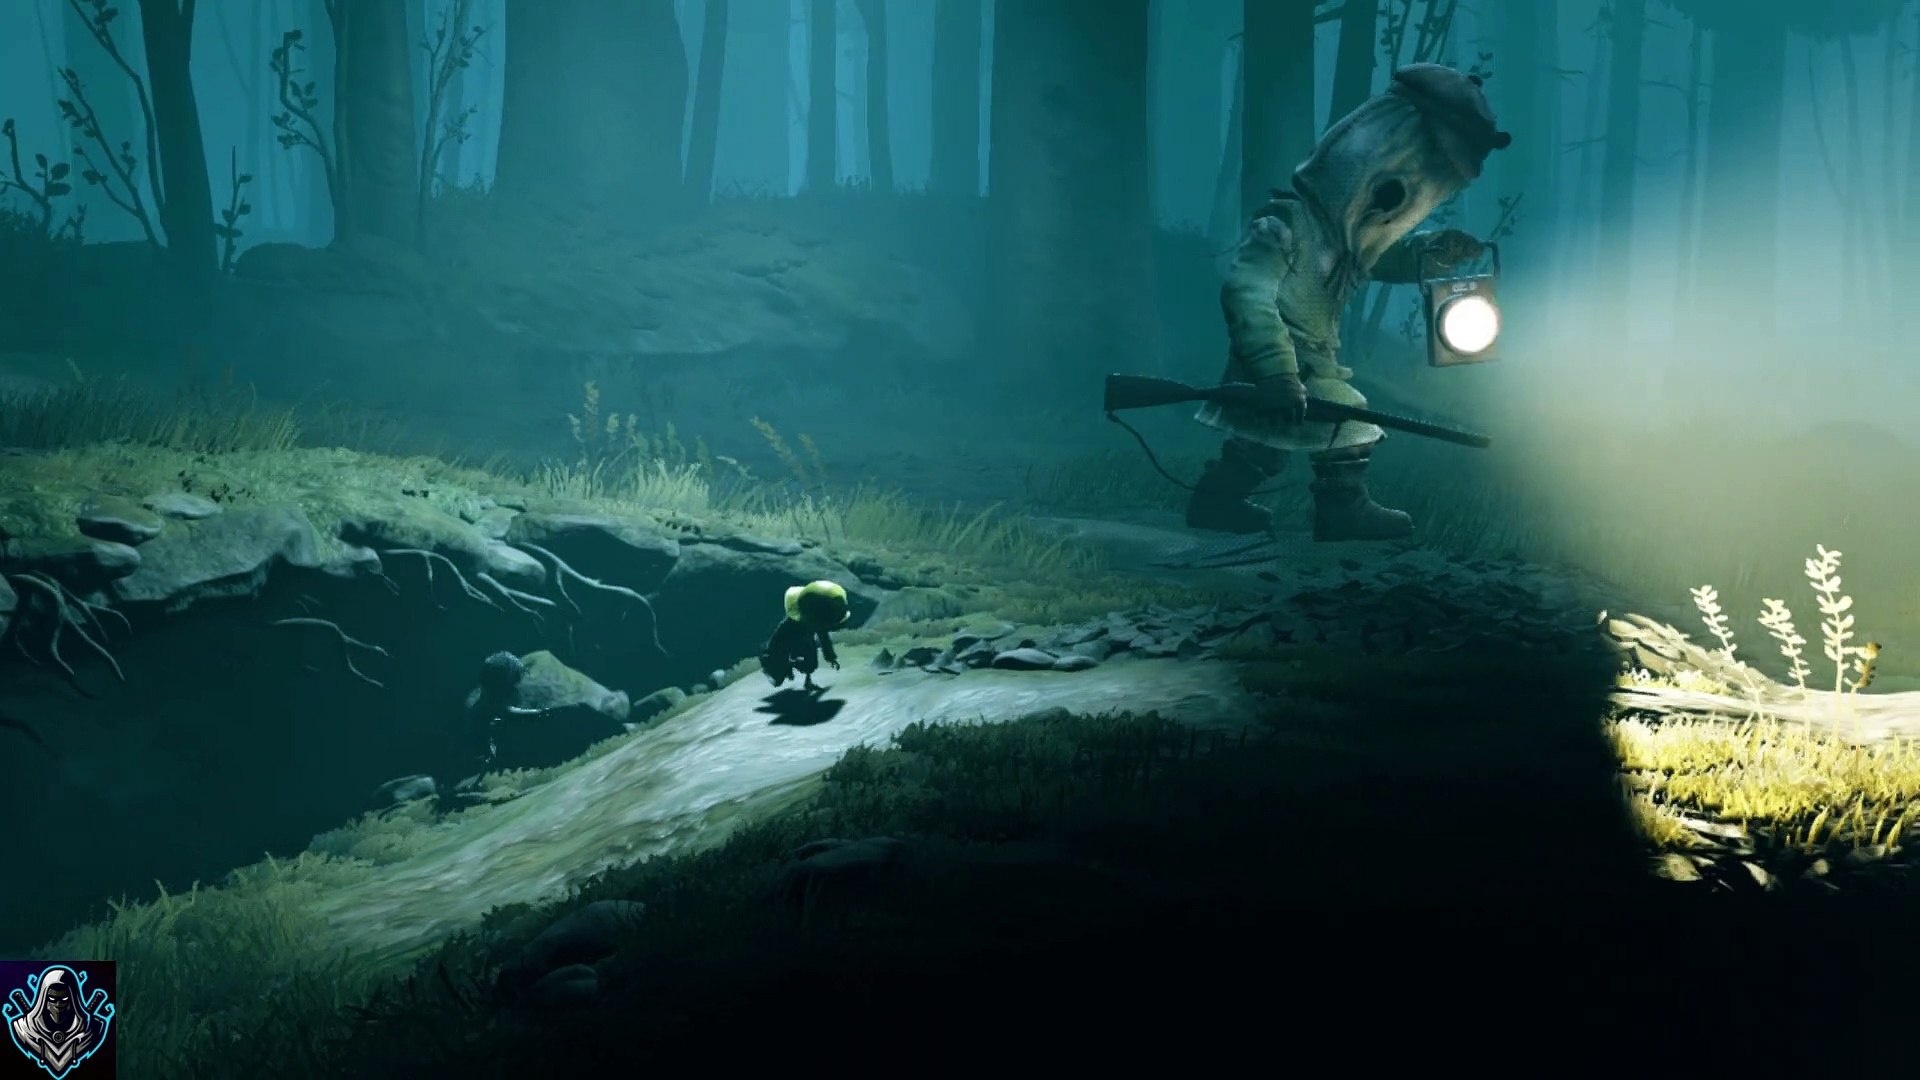 Little Nightmares 2 Demo - Full Gameplay Walkthrough (No